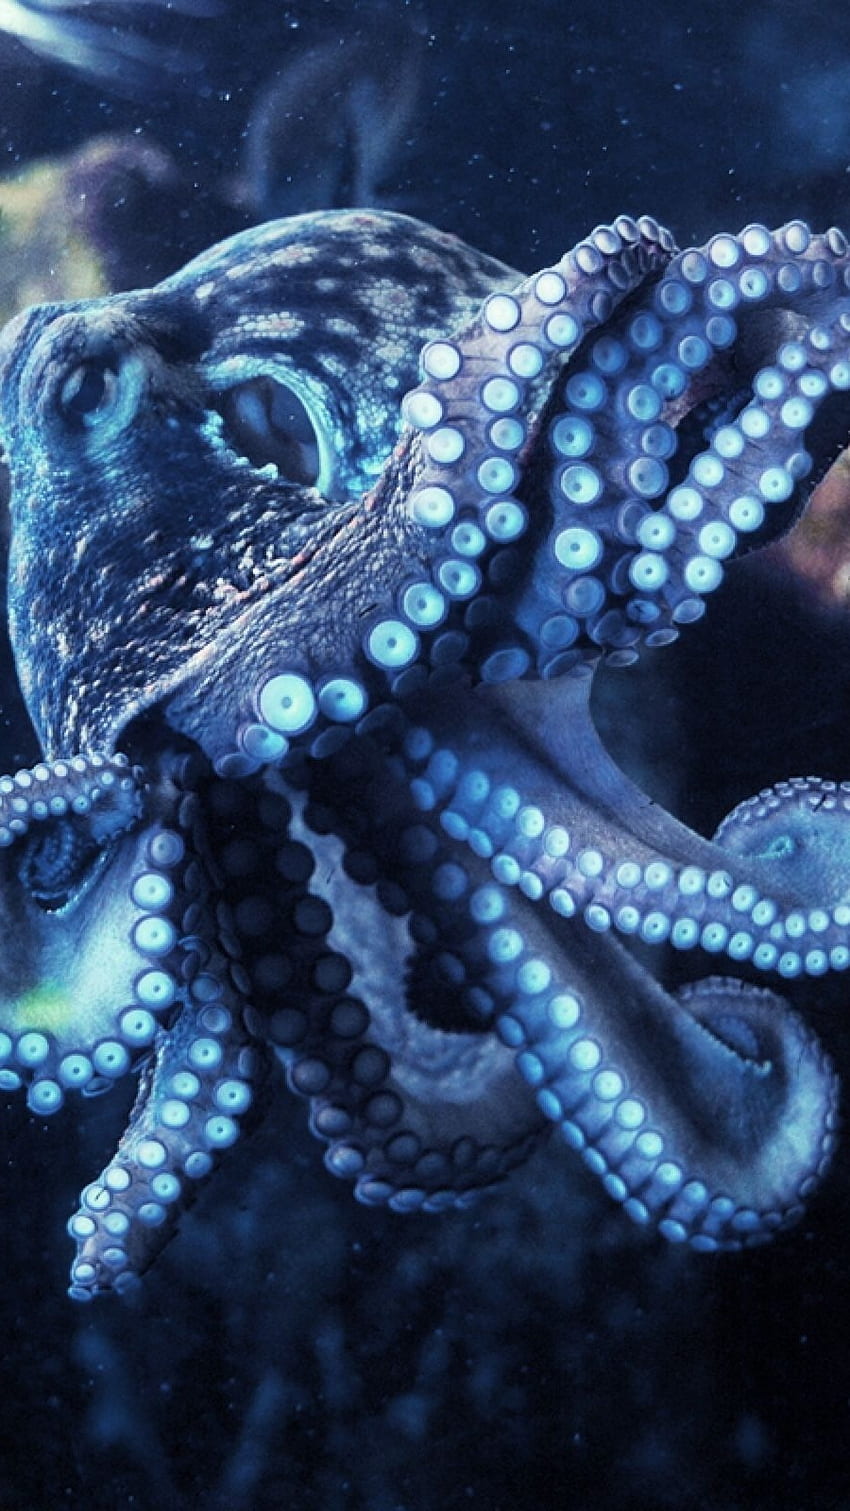 Wallpaper Octopus Minimalism Cloud Marine Invertebrates Cephalopod  Background  Download Free Image